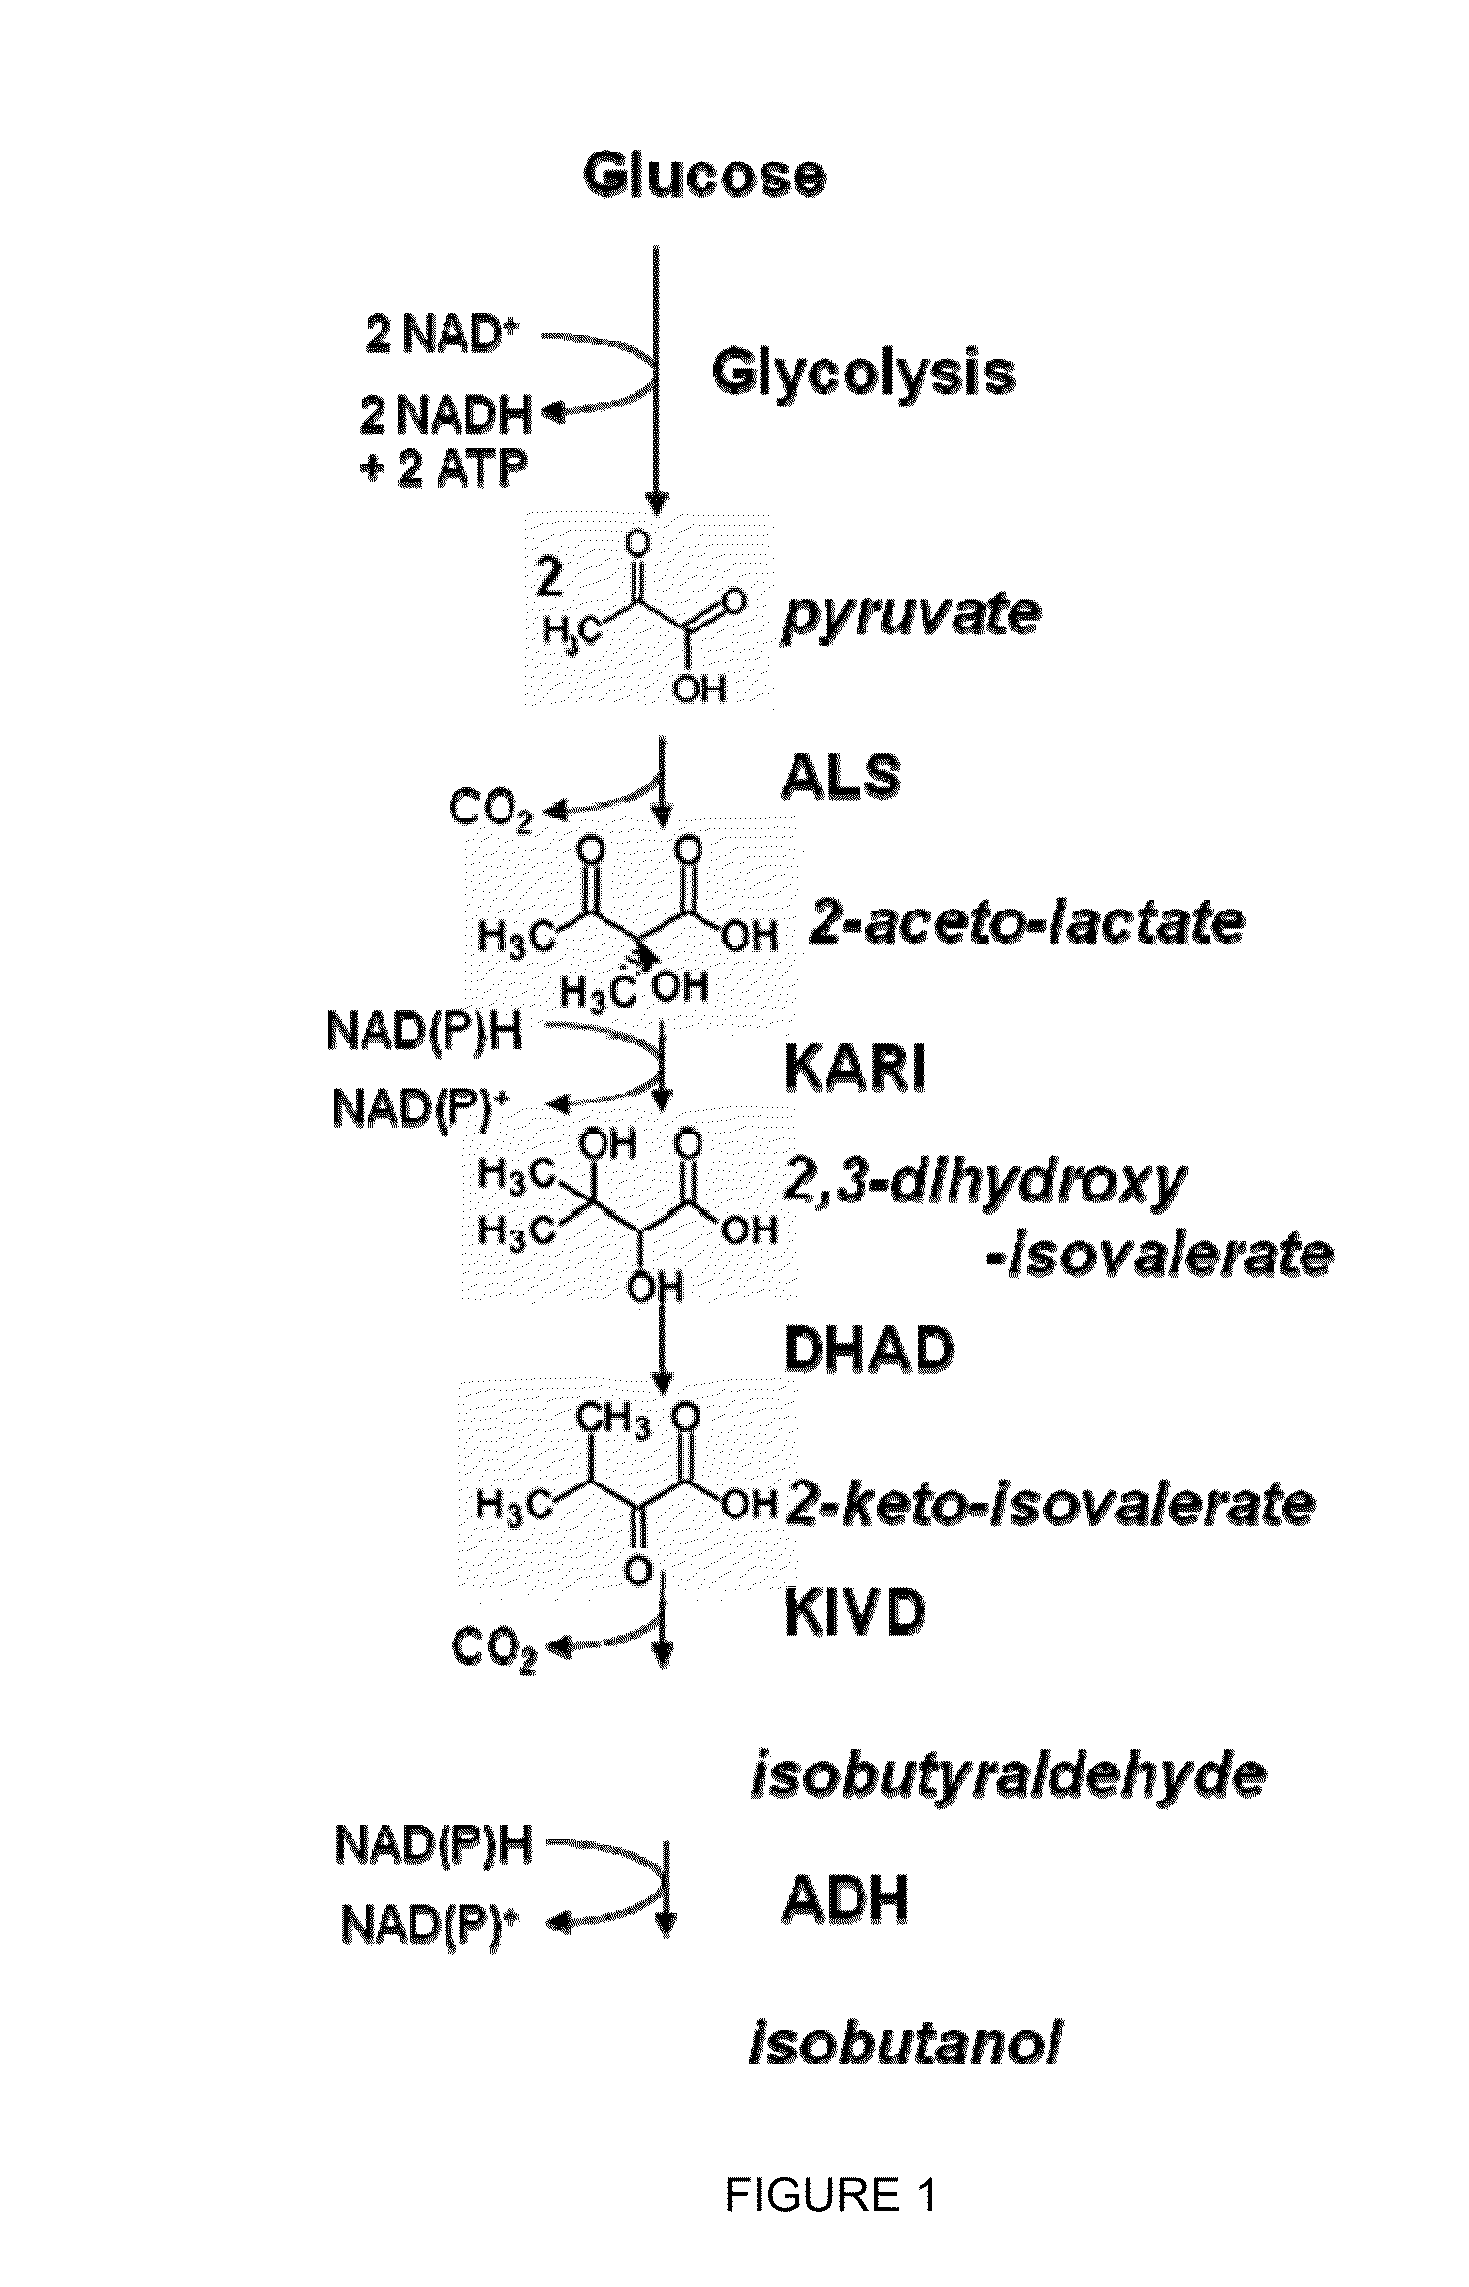 Cytosolic isobutanol pathway localization for the production of isobutanol